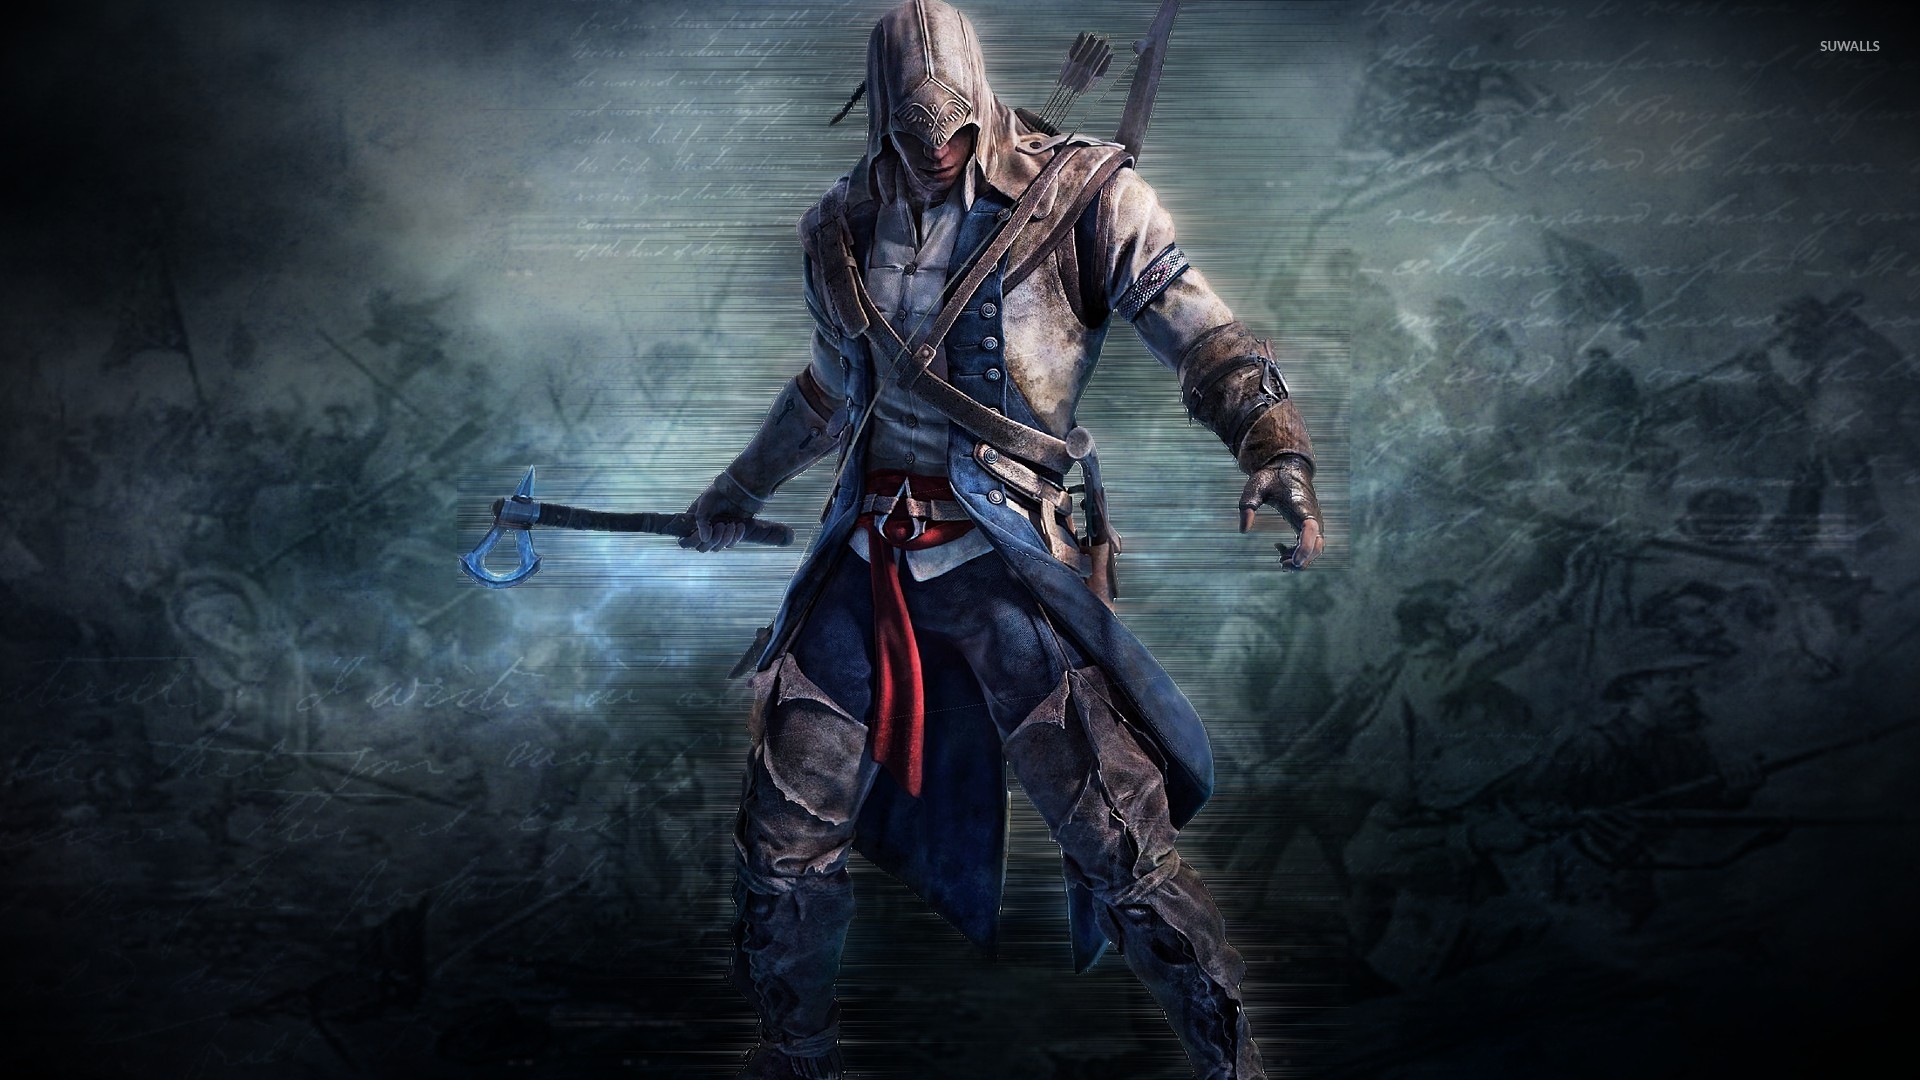 Assassins Creed 3 Wallpaper by HarmoniousDesigns on DeviantArt